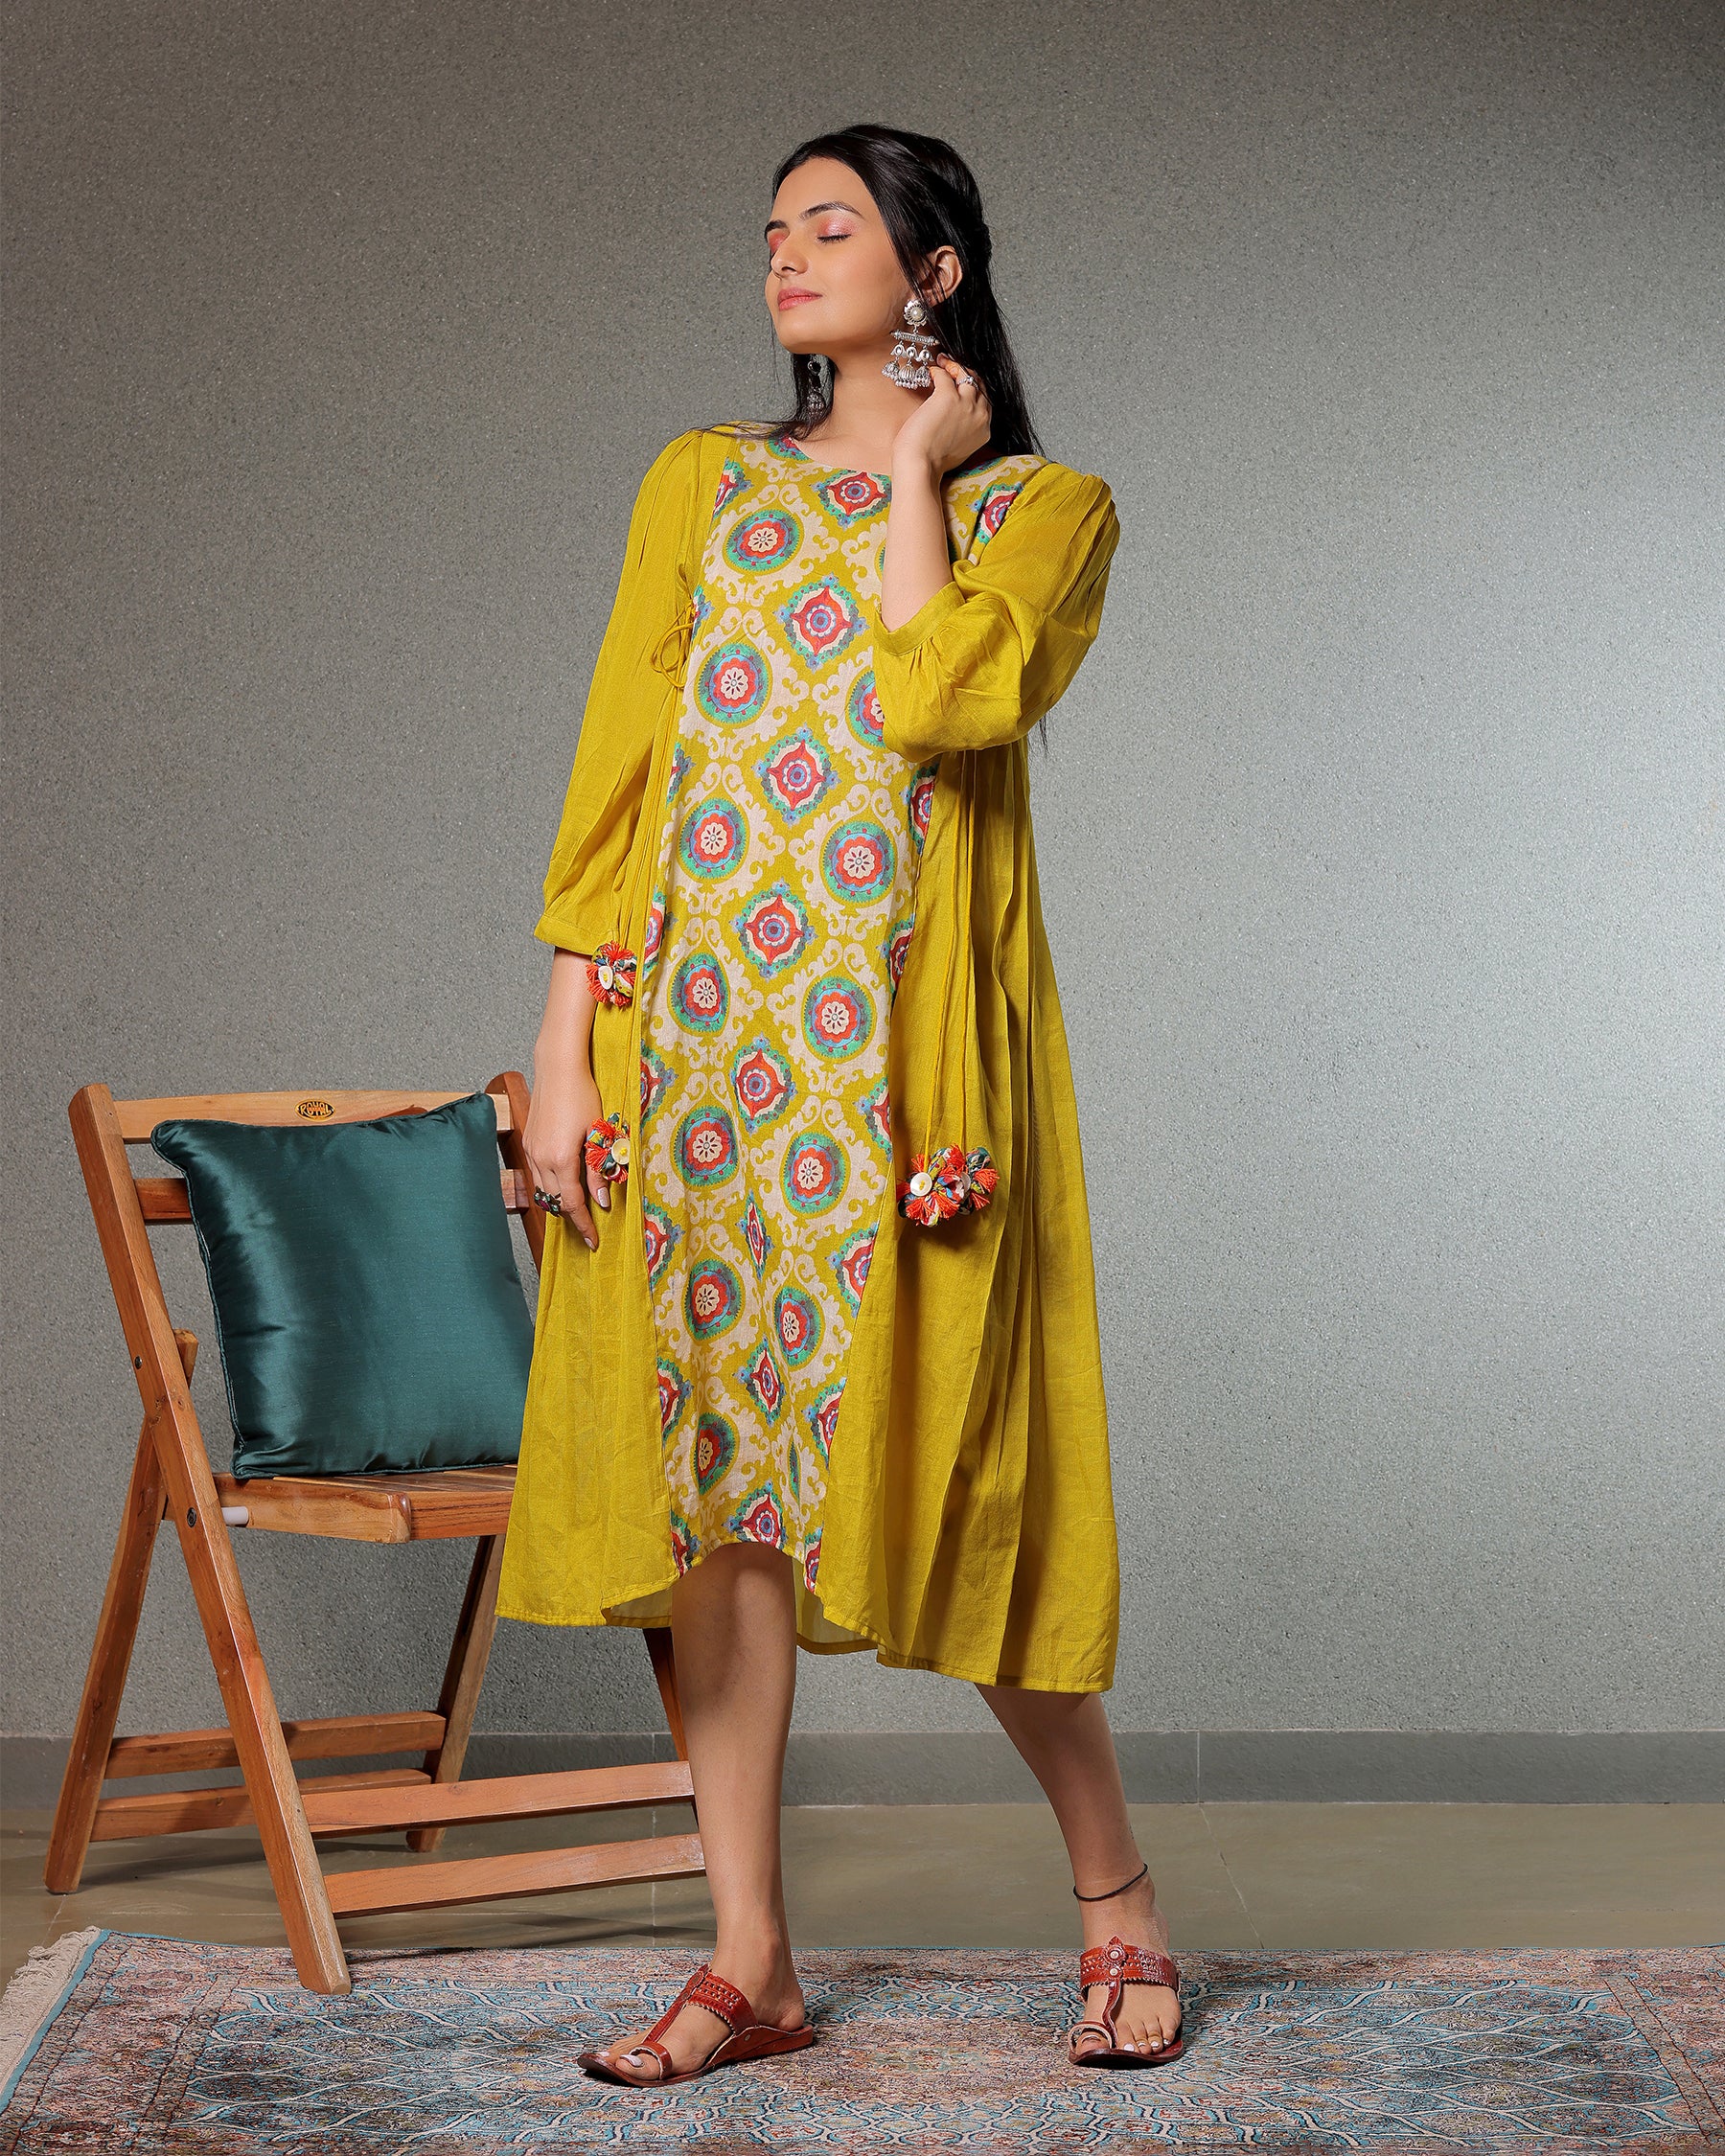 Taskeen Daffodil Yellow Dress With Side Tassels